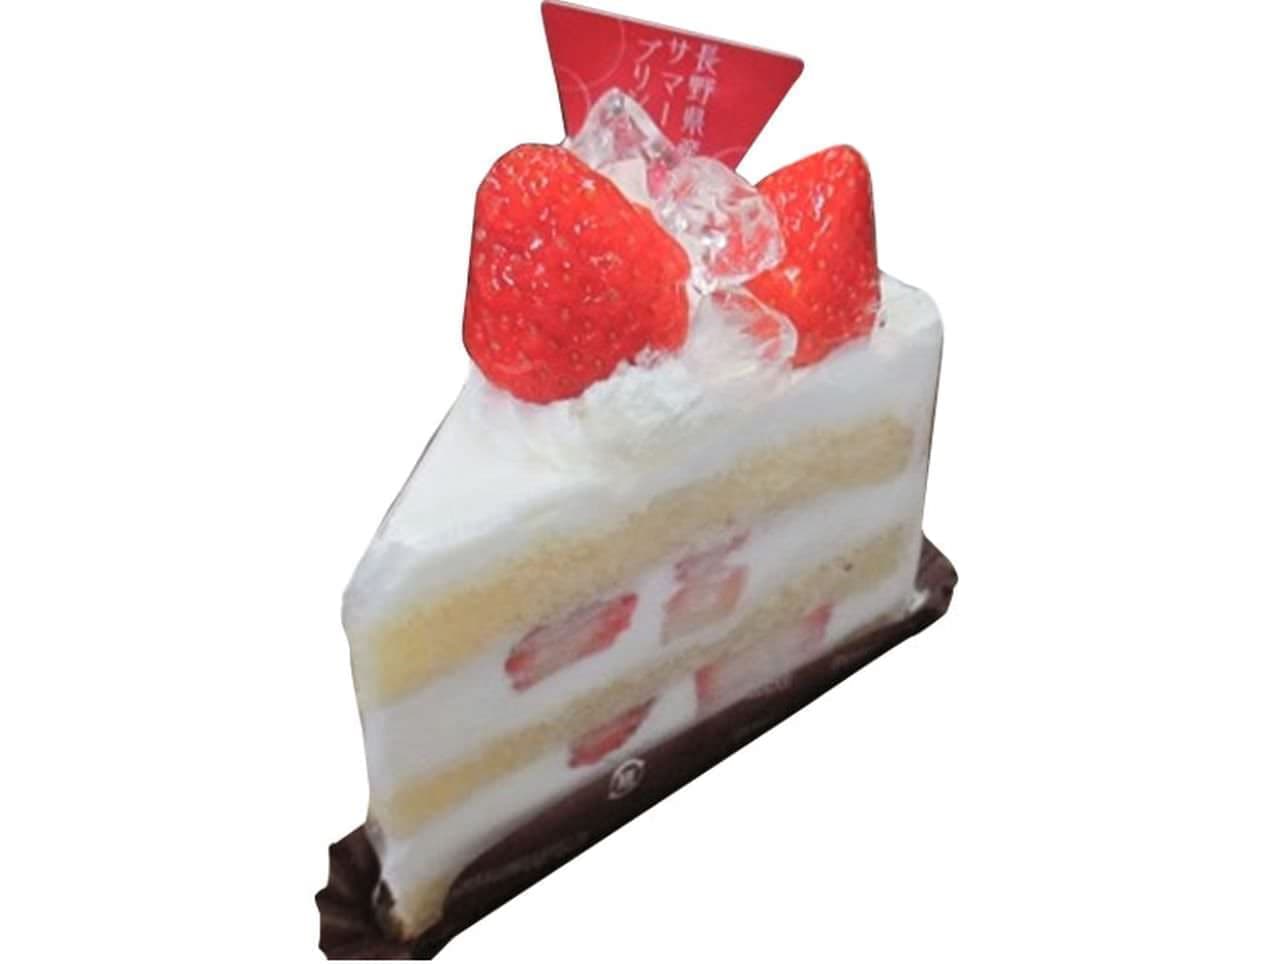 Chateraise "Nagano Prefecture Summer Princess Strawberry Premium Shortcake"